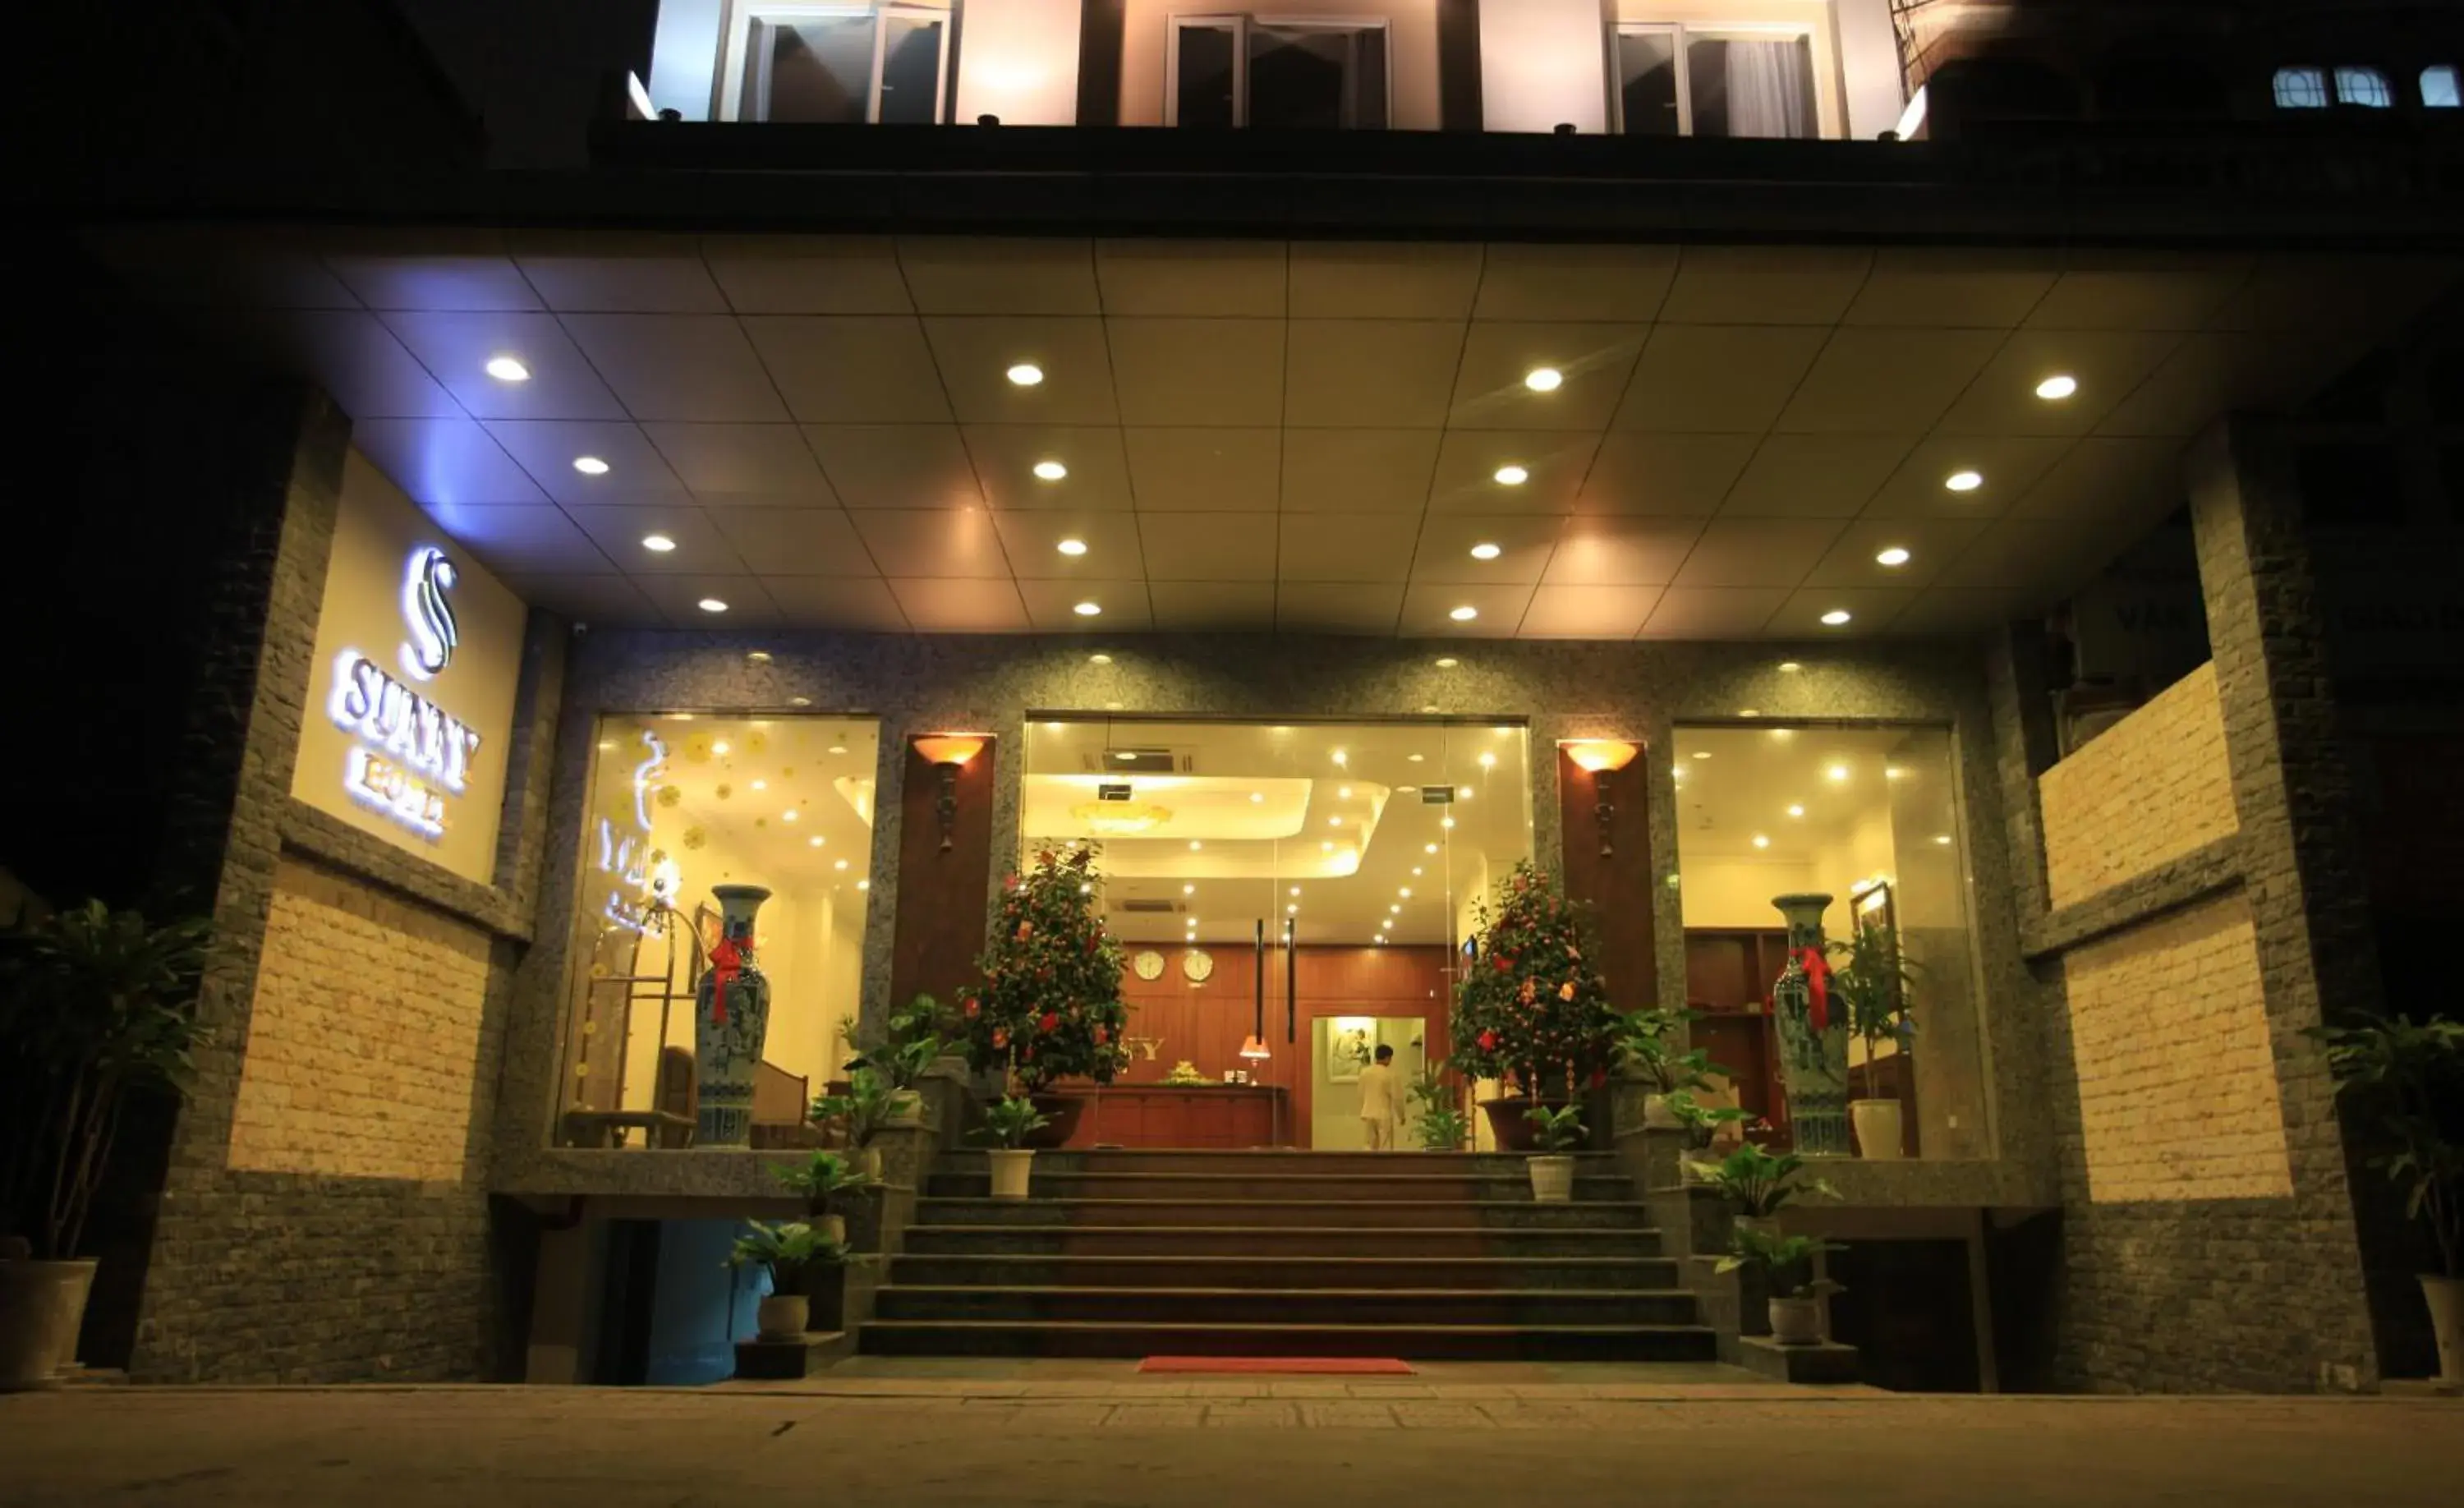 Property building, Facade/Entrance in Sunny 3 Hotel